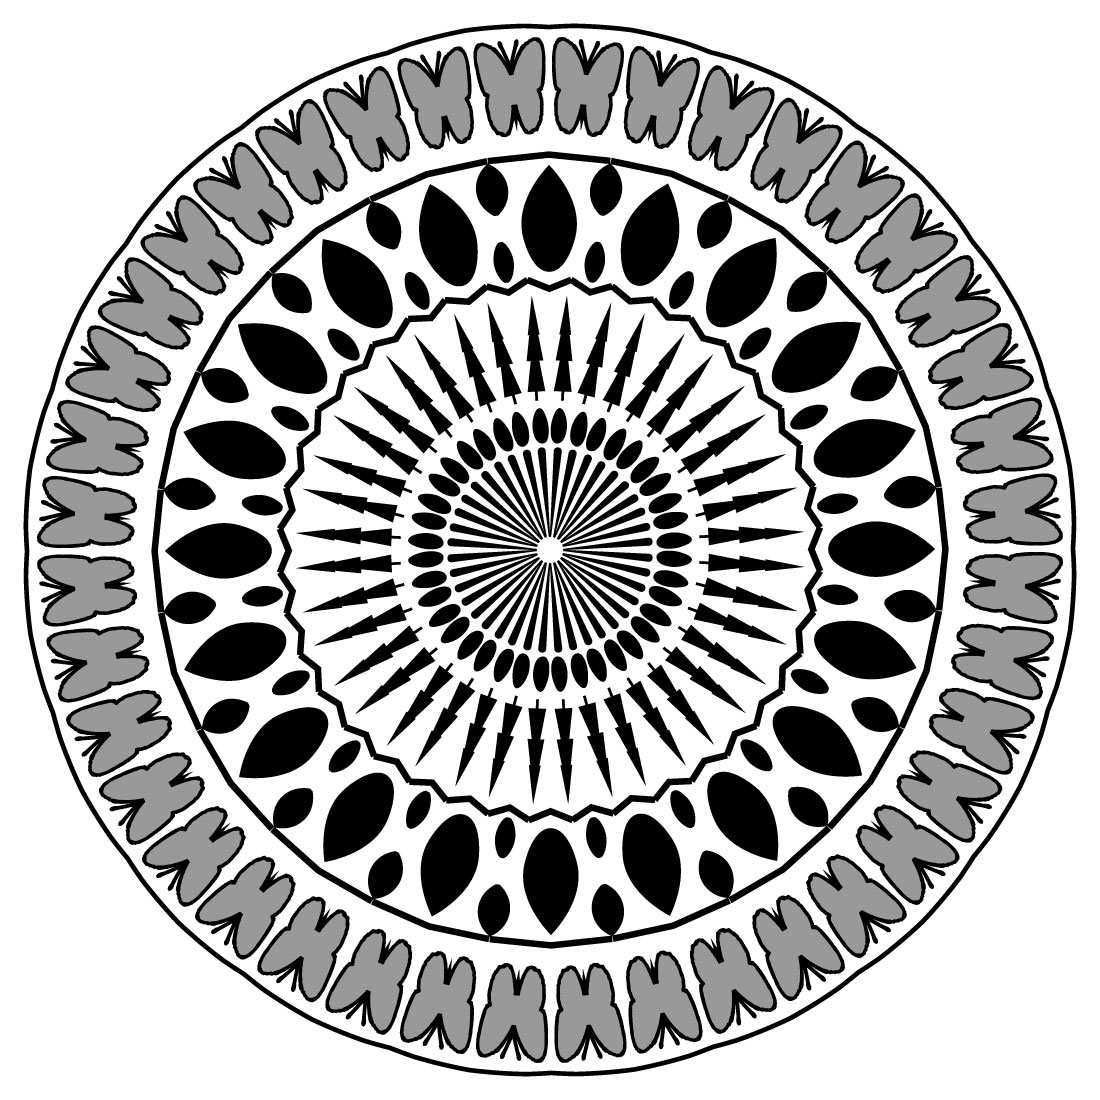 Mandala Art cock in blak and white circles cover image.